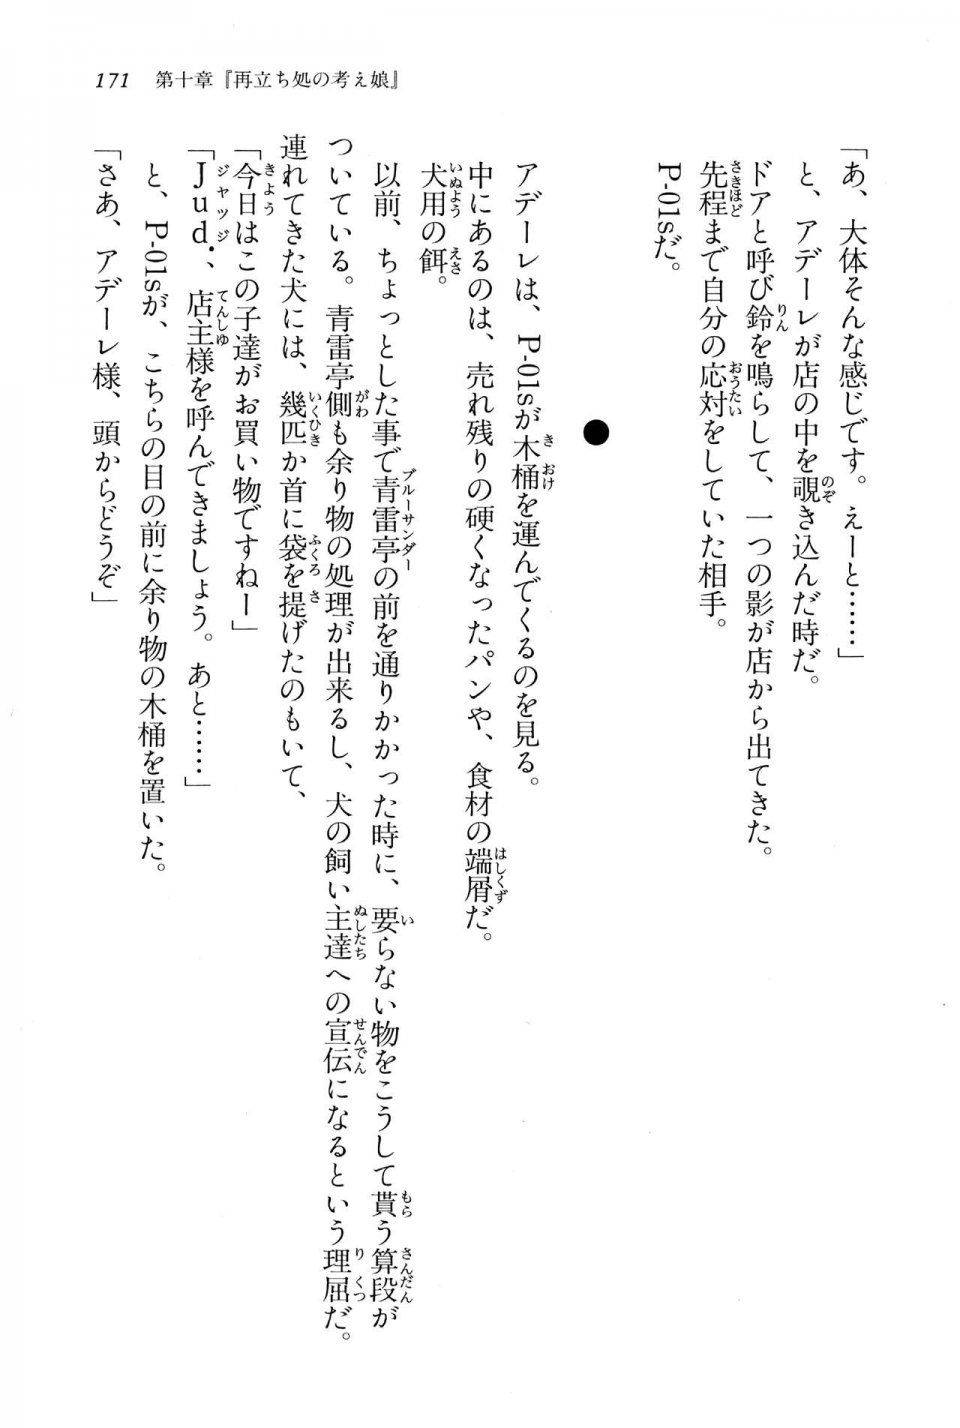 Kyoukai Senjou no Horizon BD Special Mininovel Vol 6(3B) - Photo #175